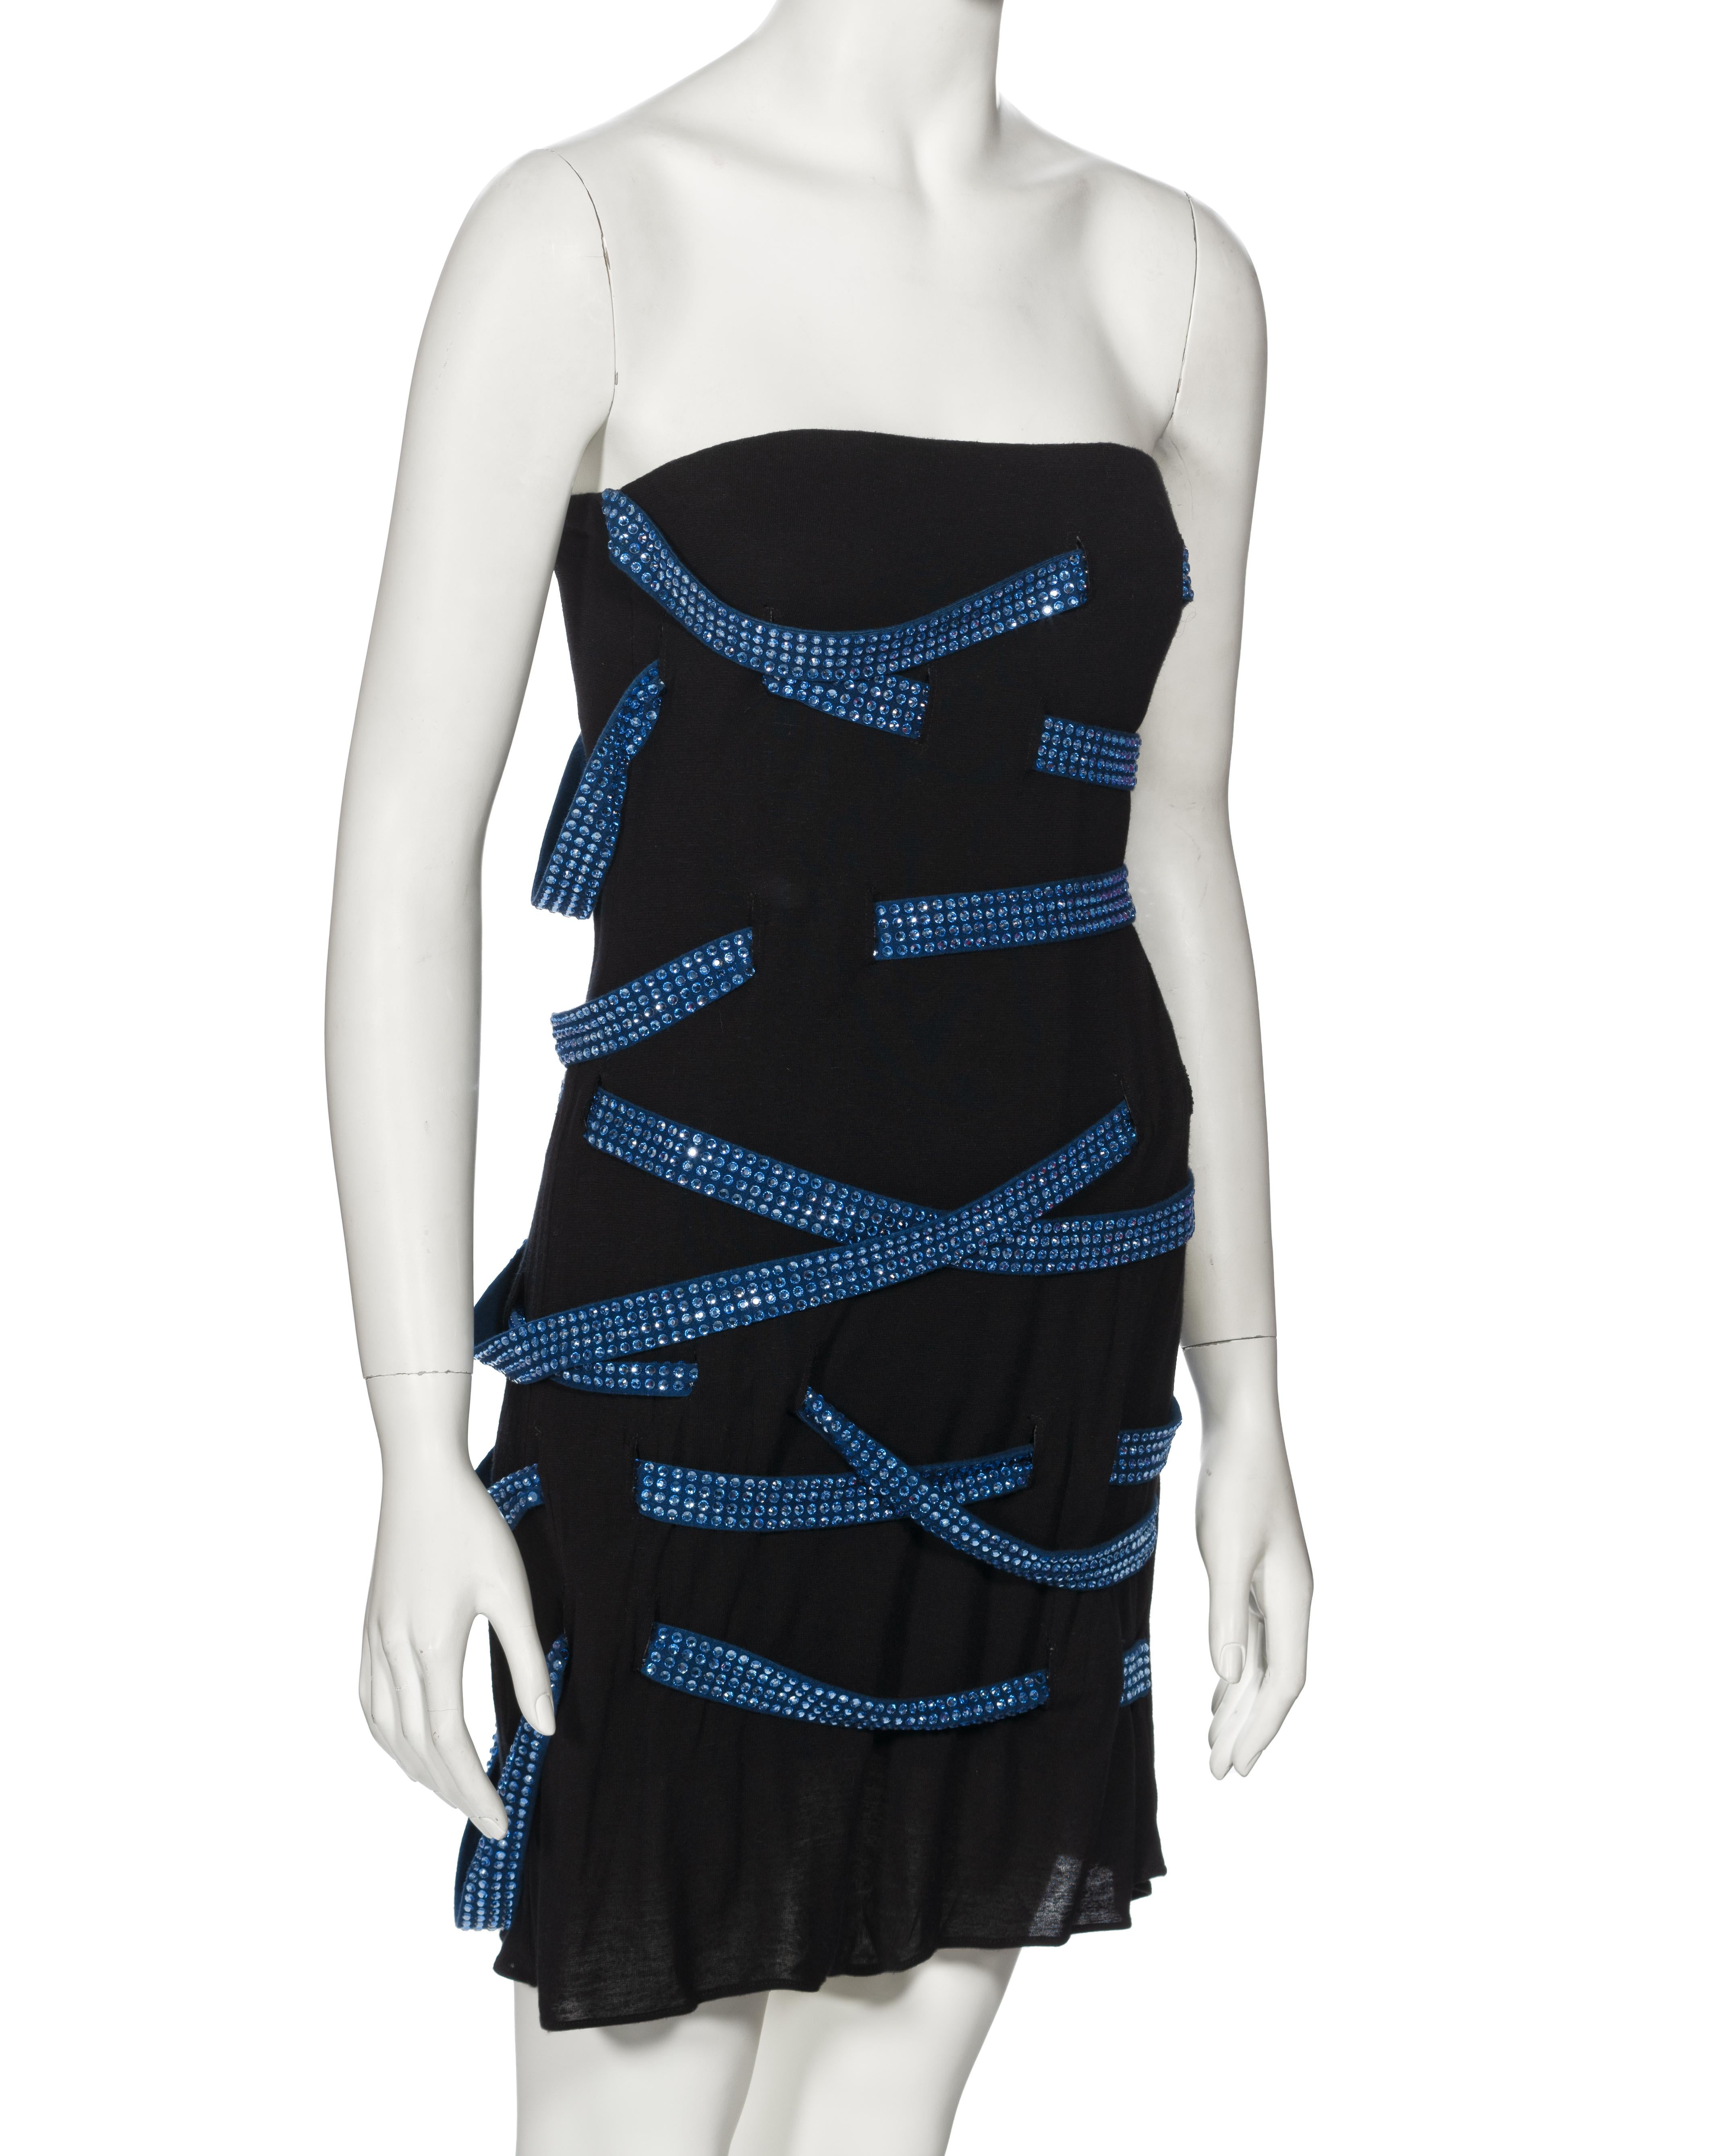 Martin Margiela Black Crystal-Laced Viscose Mini Dress, ss 2009 For Sale 4